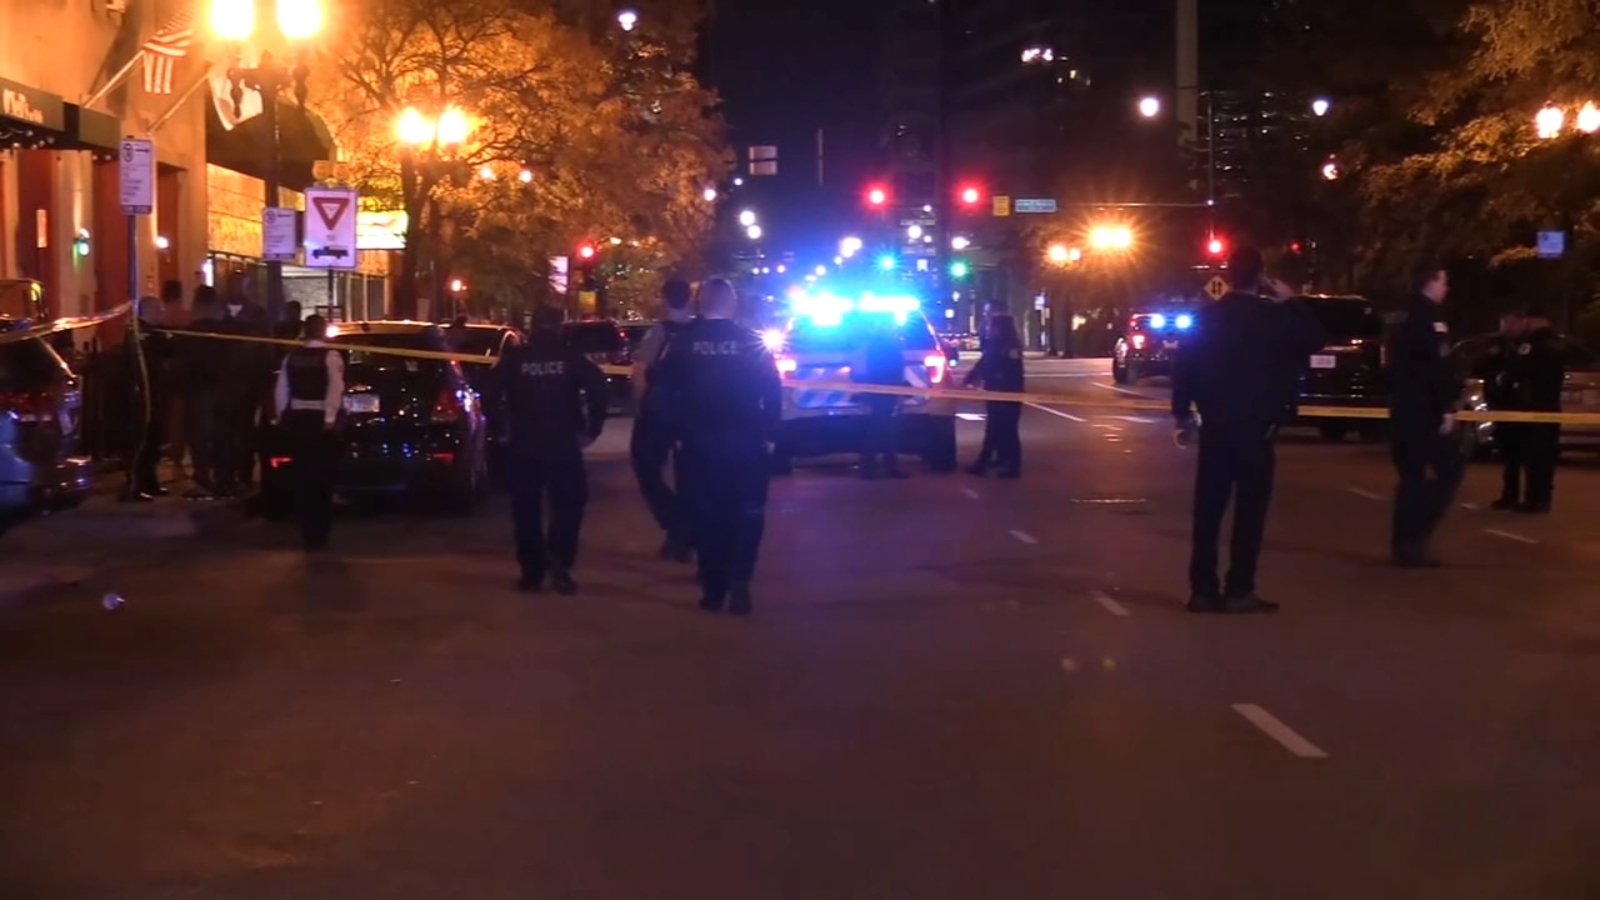 Chicago shootings: 22 shot, 4 killed, in weekend gun violence across city, police say